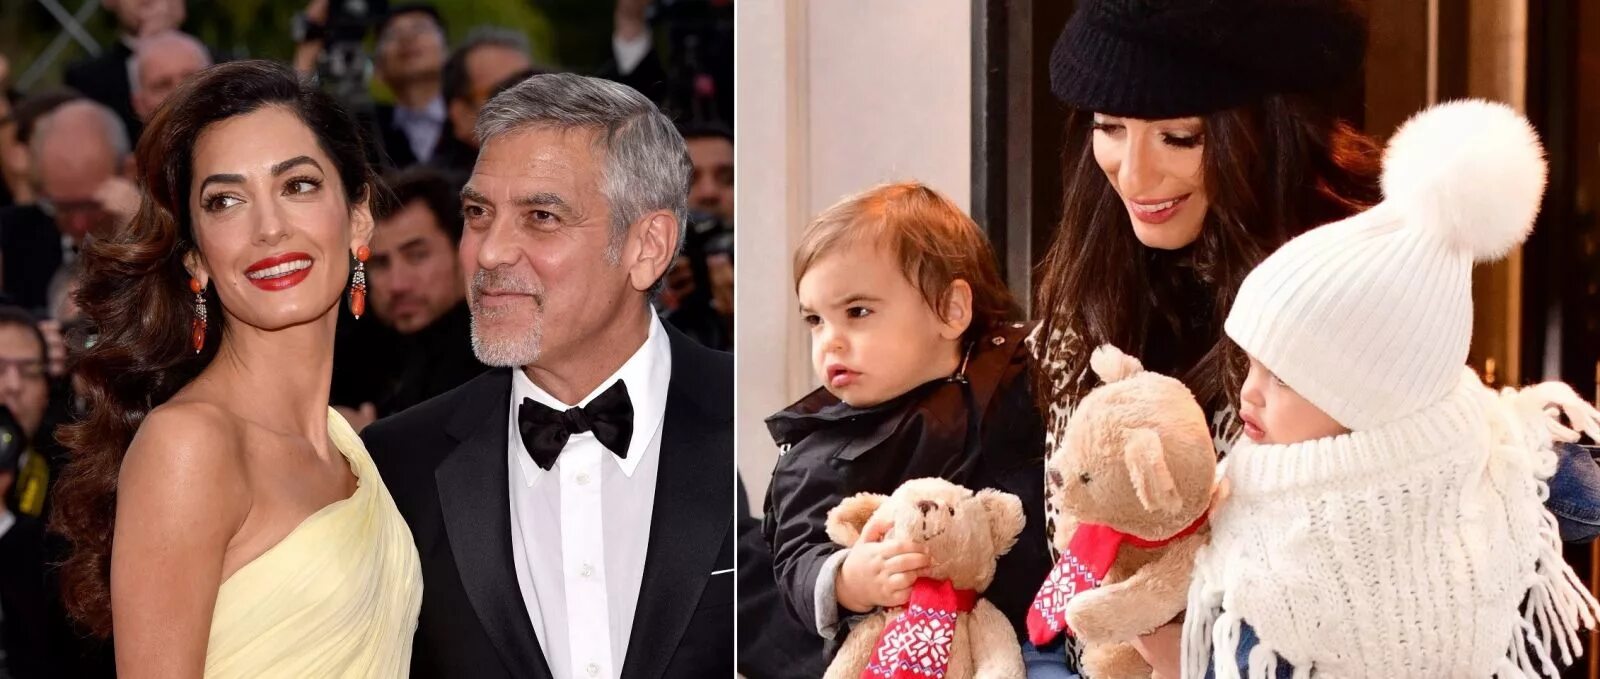 George children. Джордж Клуни дети.